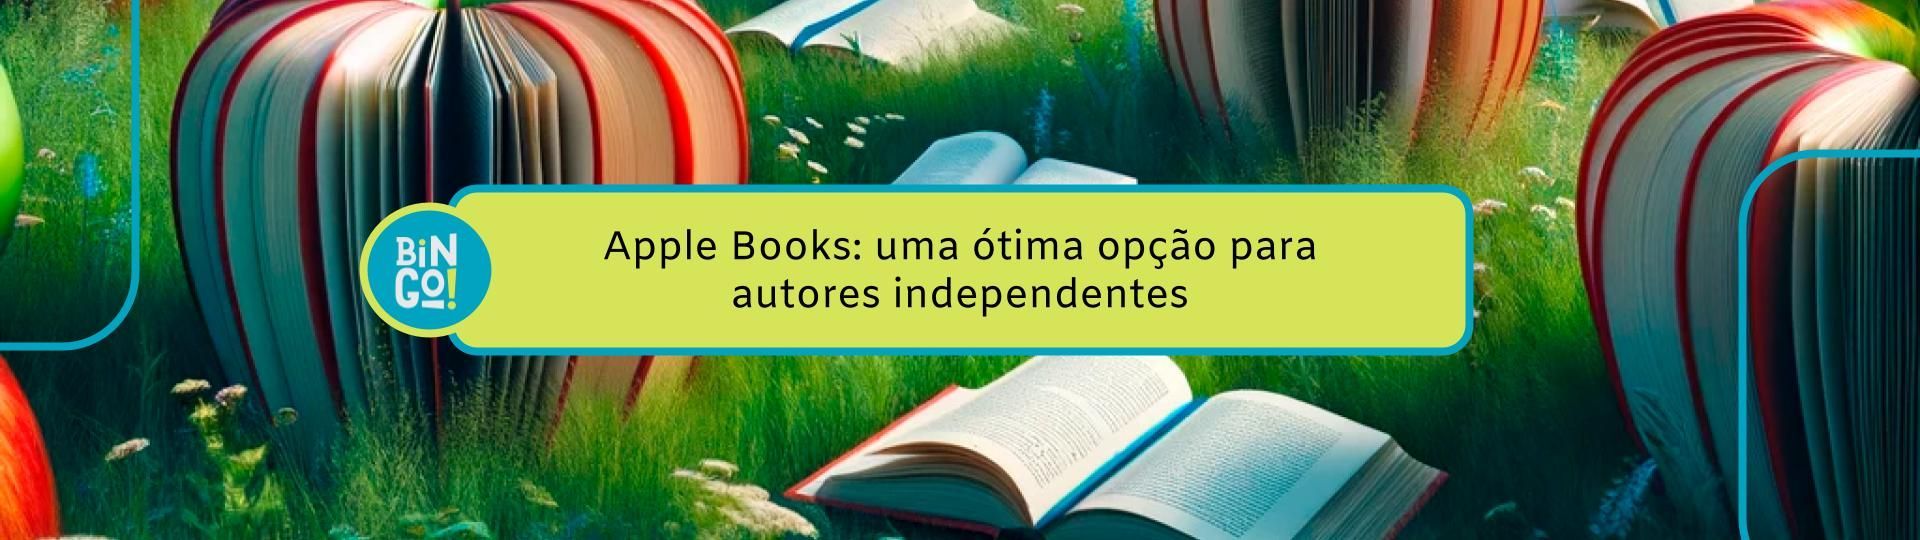 apple-books-uma-otima-opcao-para-autores-independentes